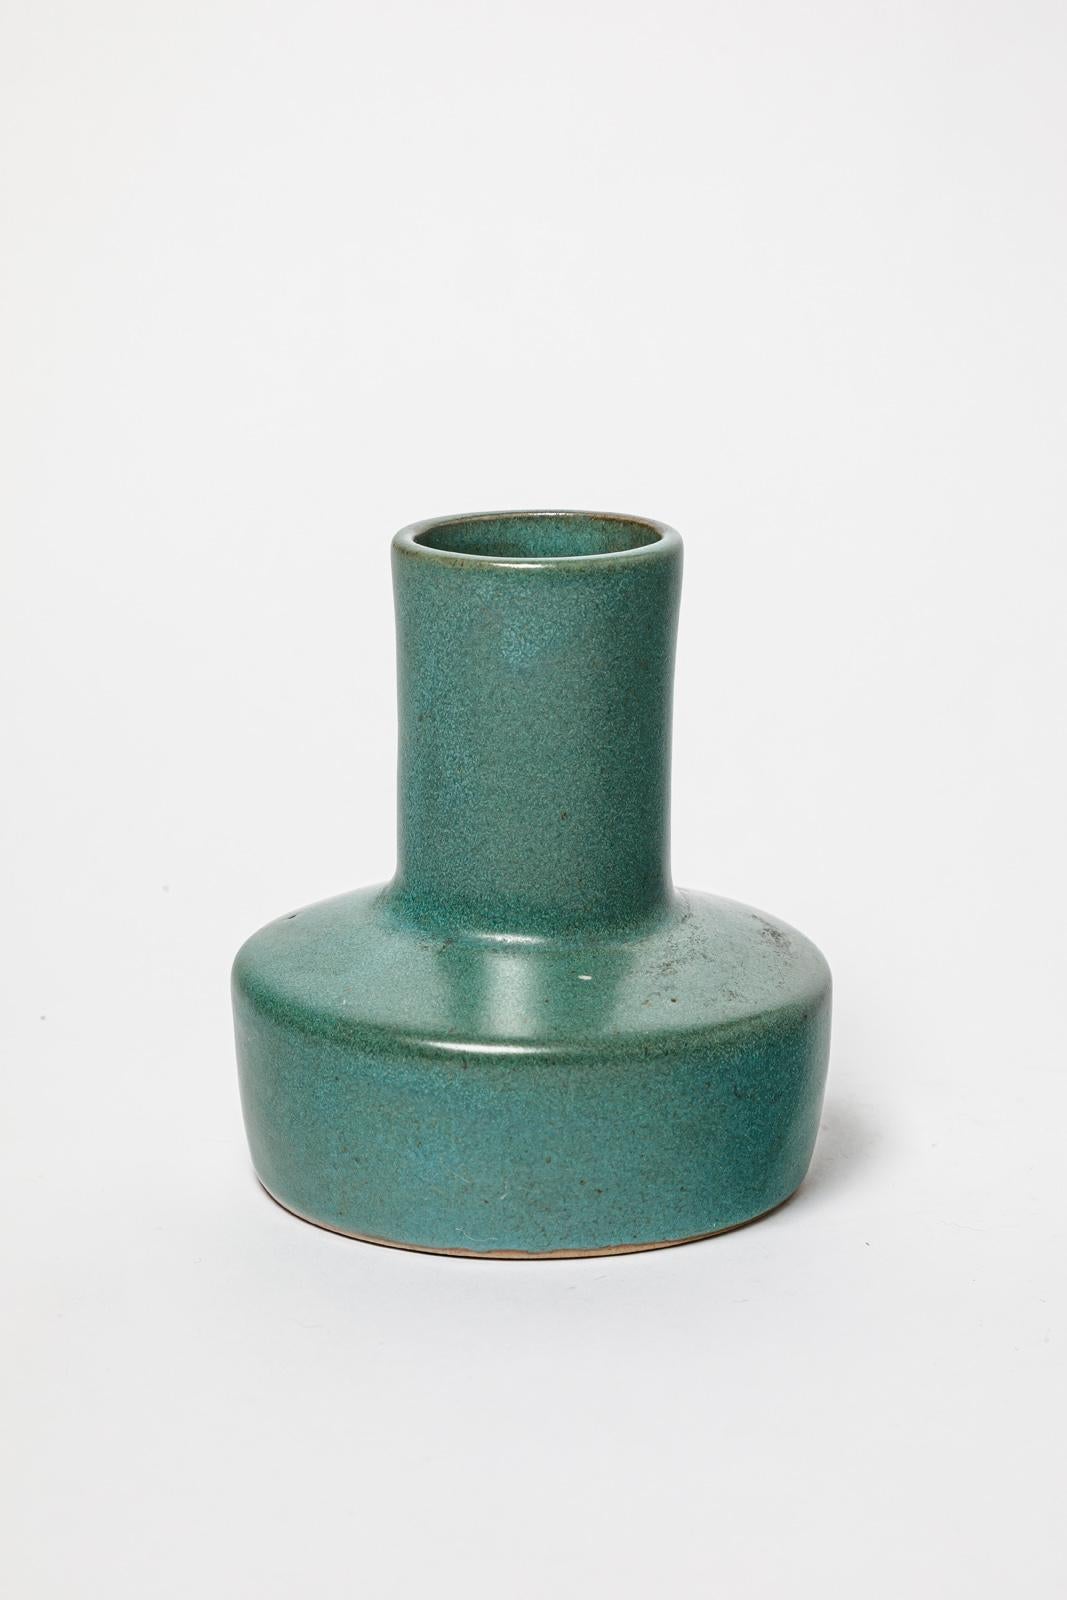 20th Century 20th century design green ceramic vase by Tim Orr unique piece 1970 For Sale